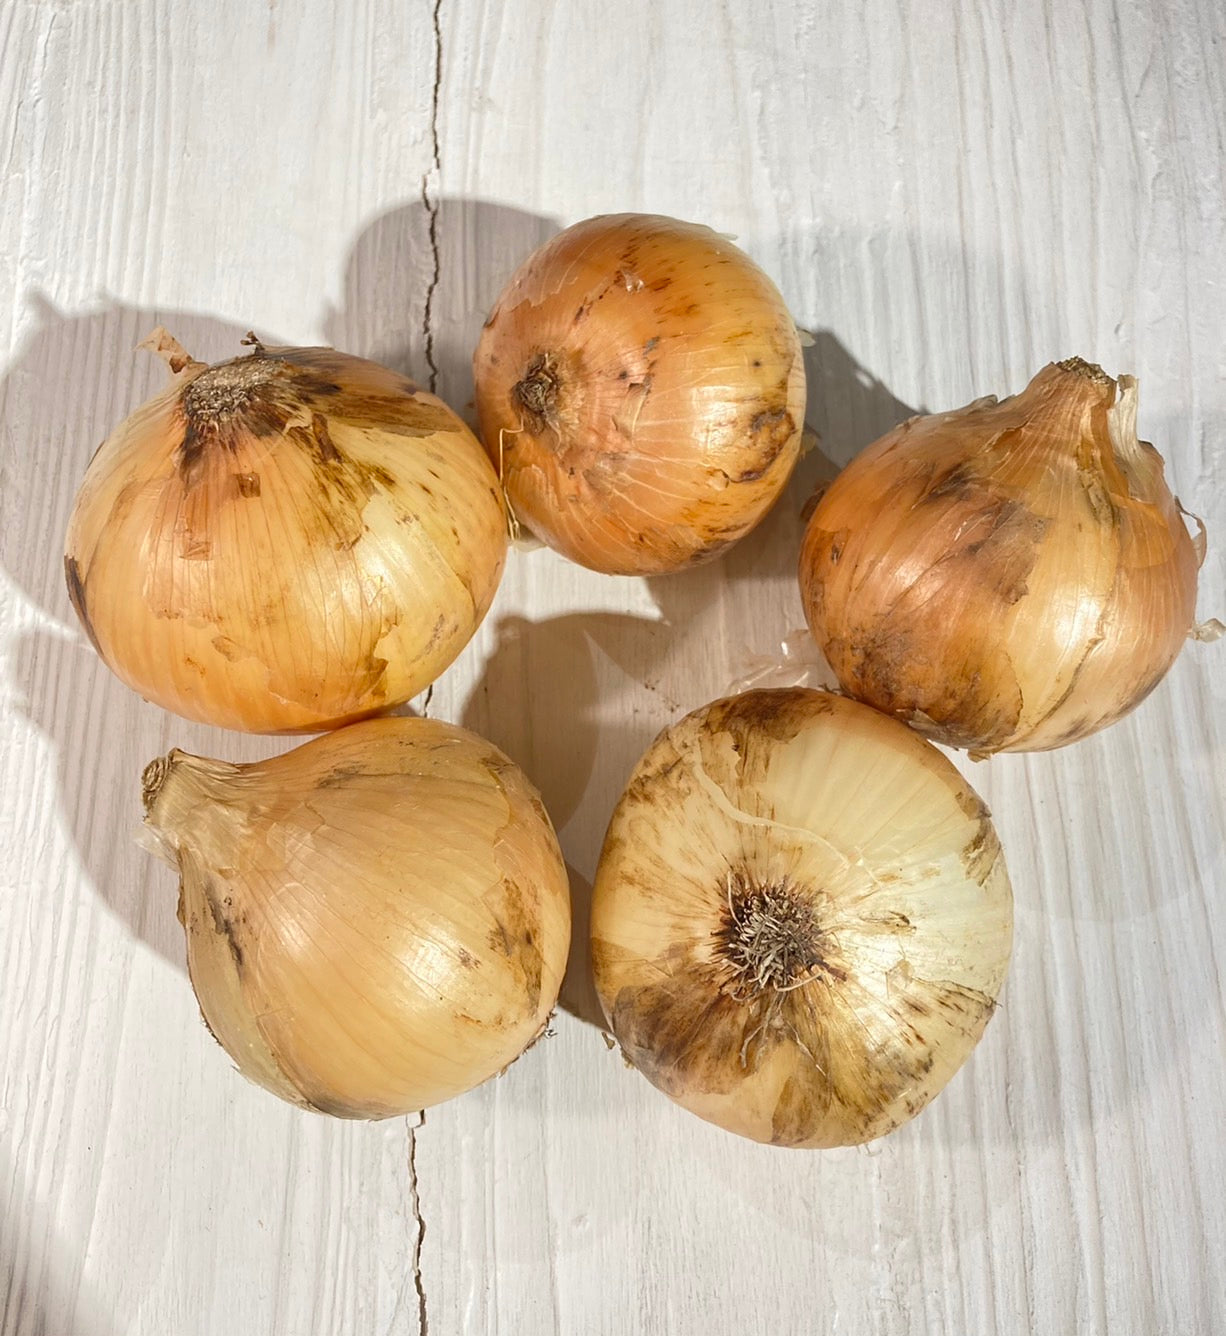 Naturally grown salad onions, 1 pack, 1kg (Yamazaki-san)